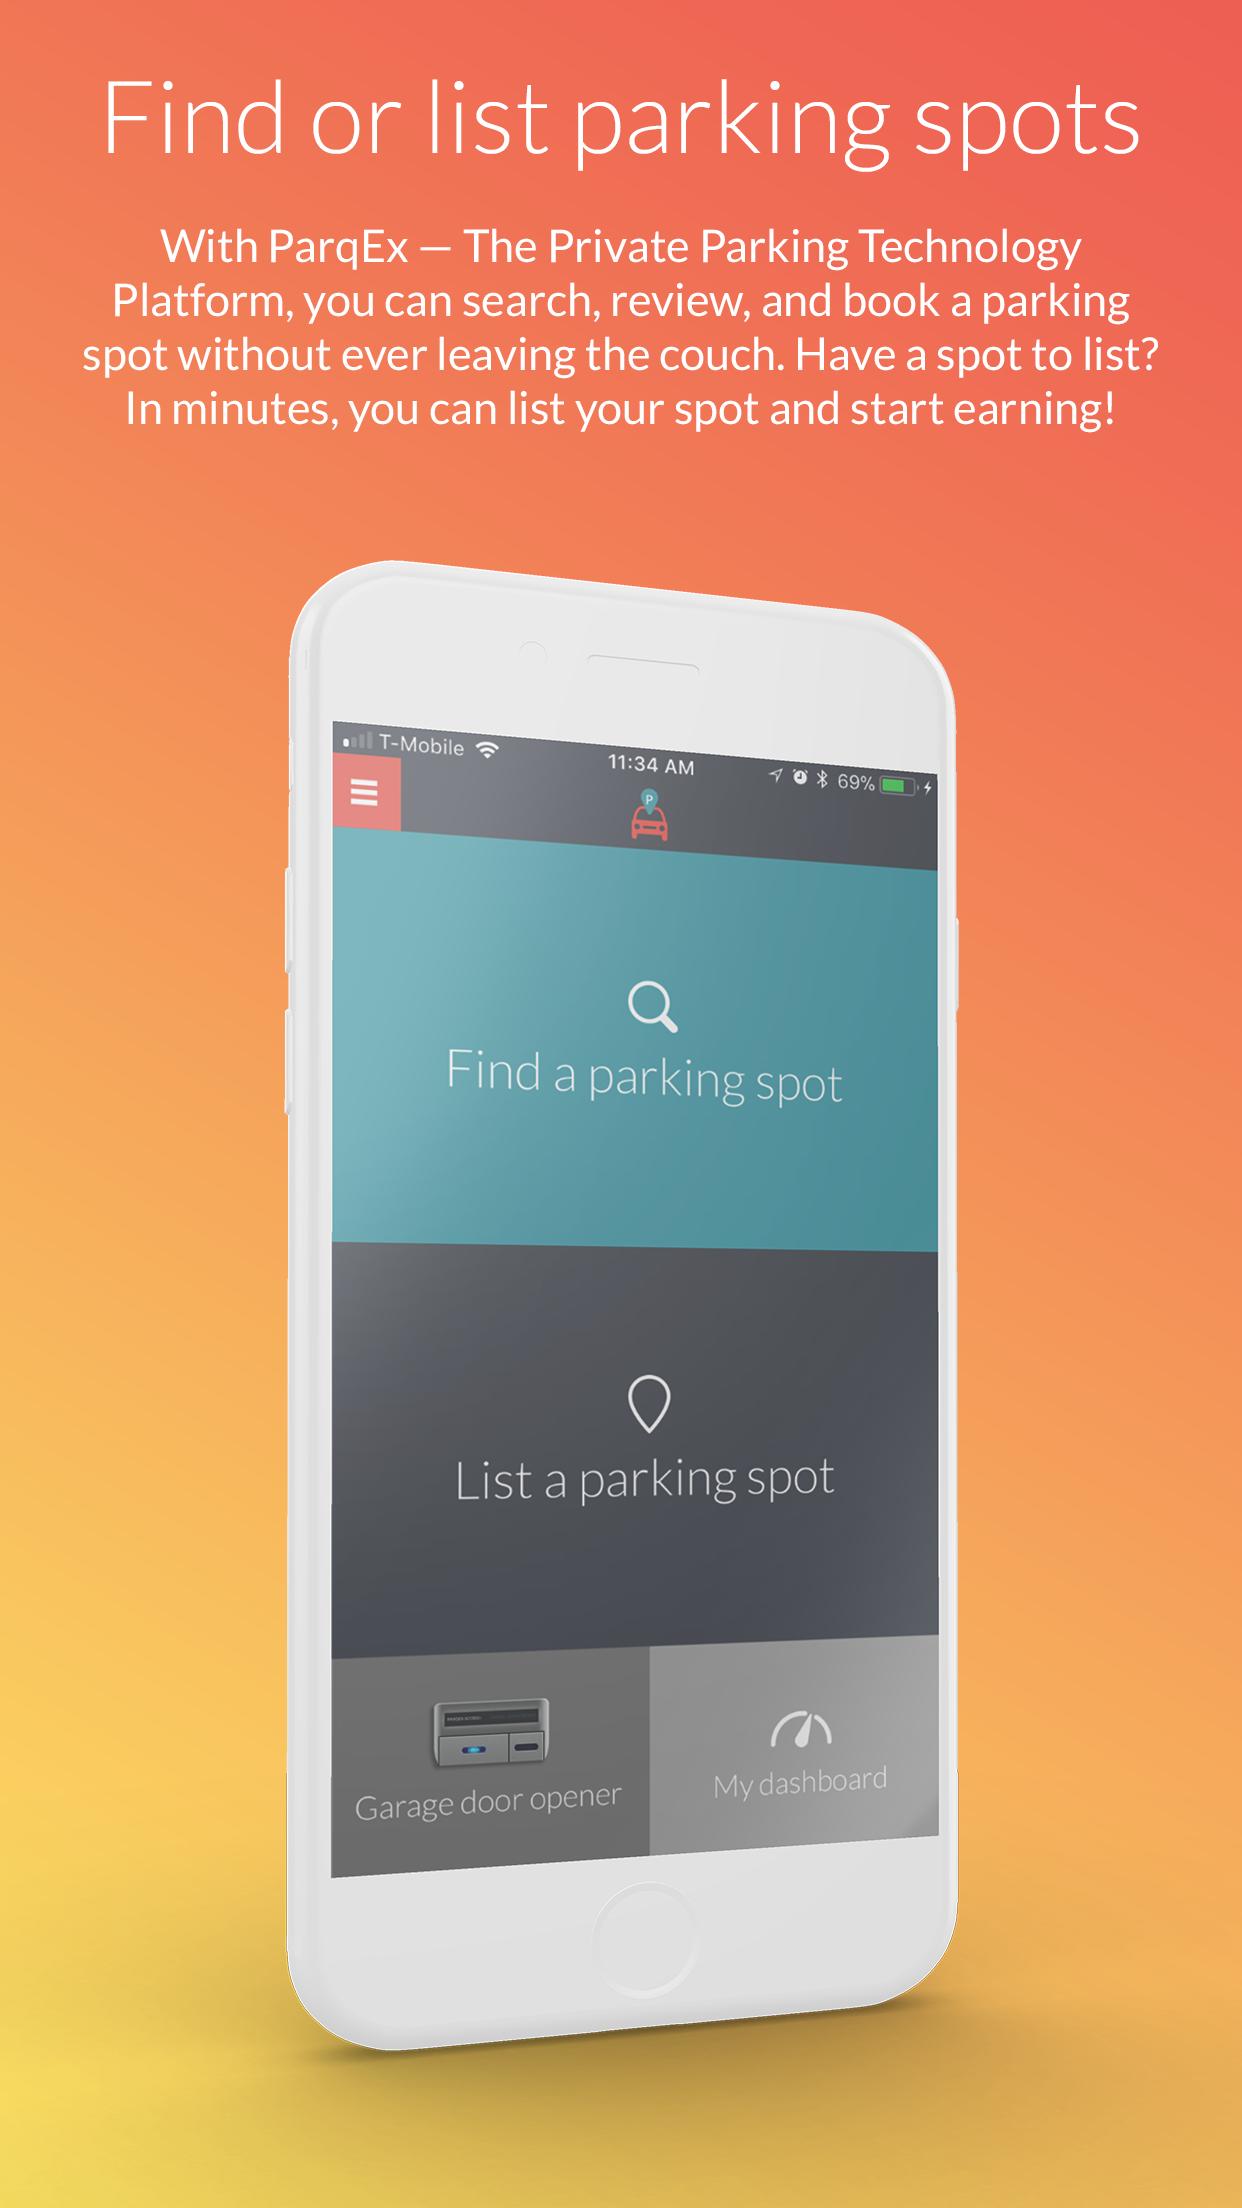 ParqEx - The Smart Parking Platform